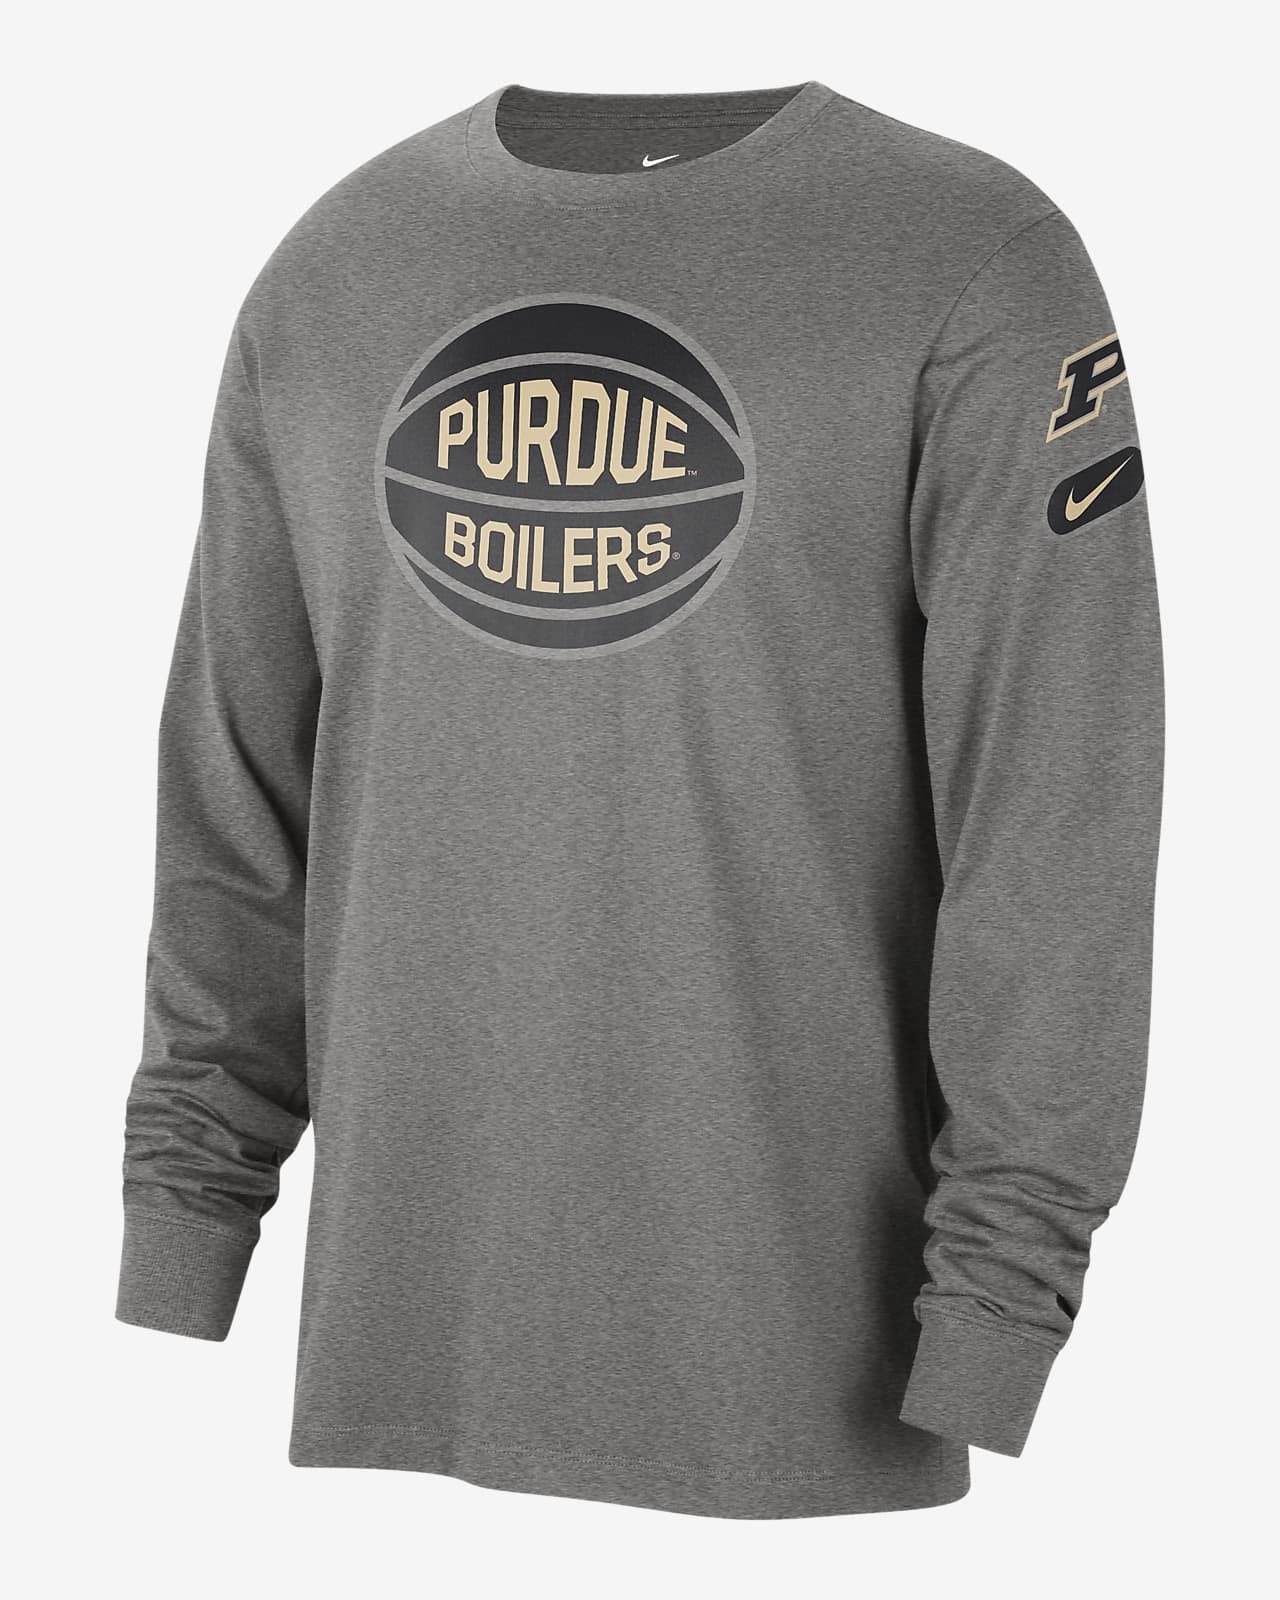 Purdue Fast Break Men's Nike College Long-Sleeve T-Shirt